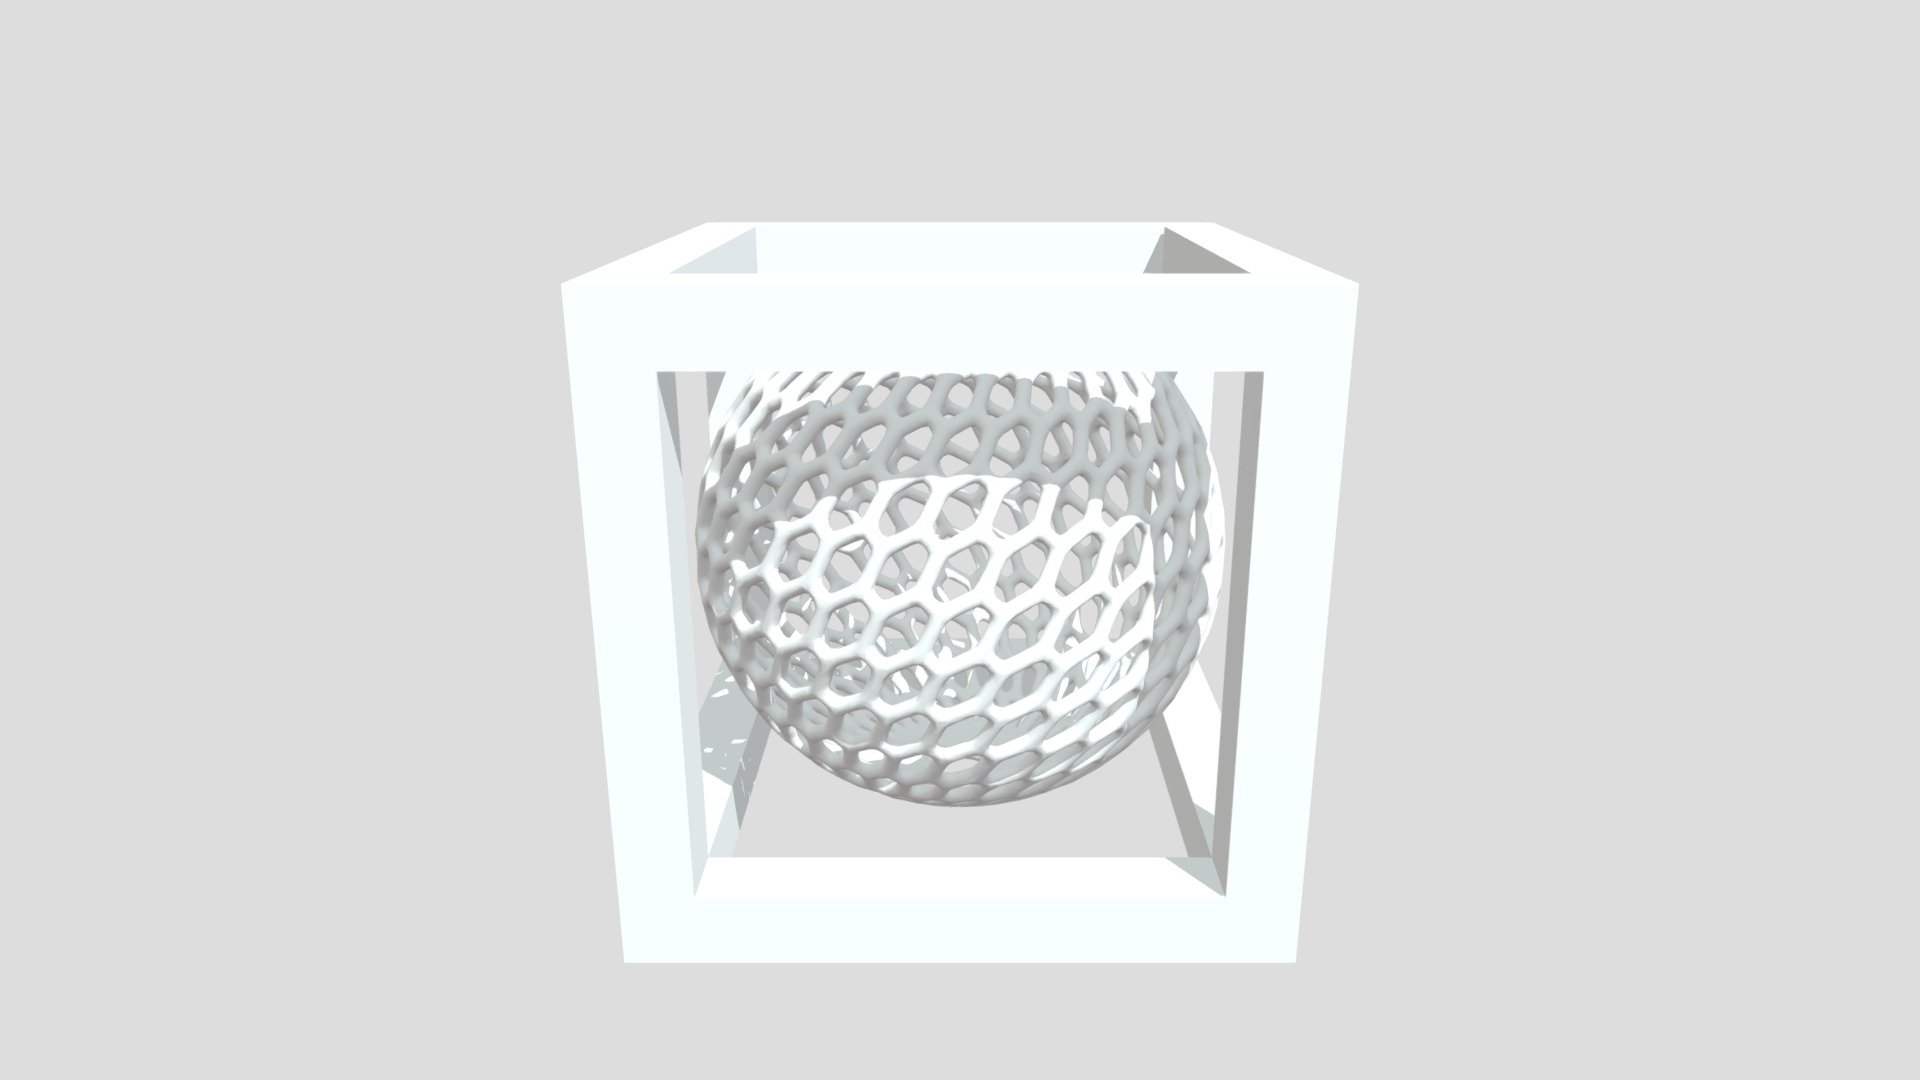 Voronoi sphere inside a hollow cube.